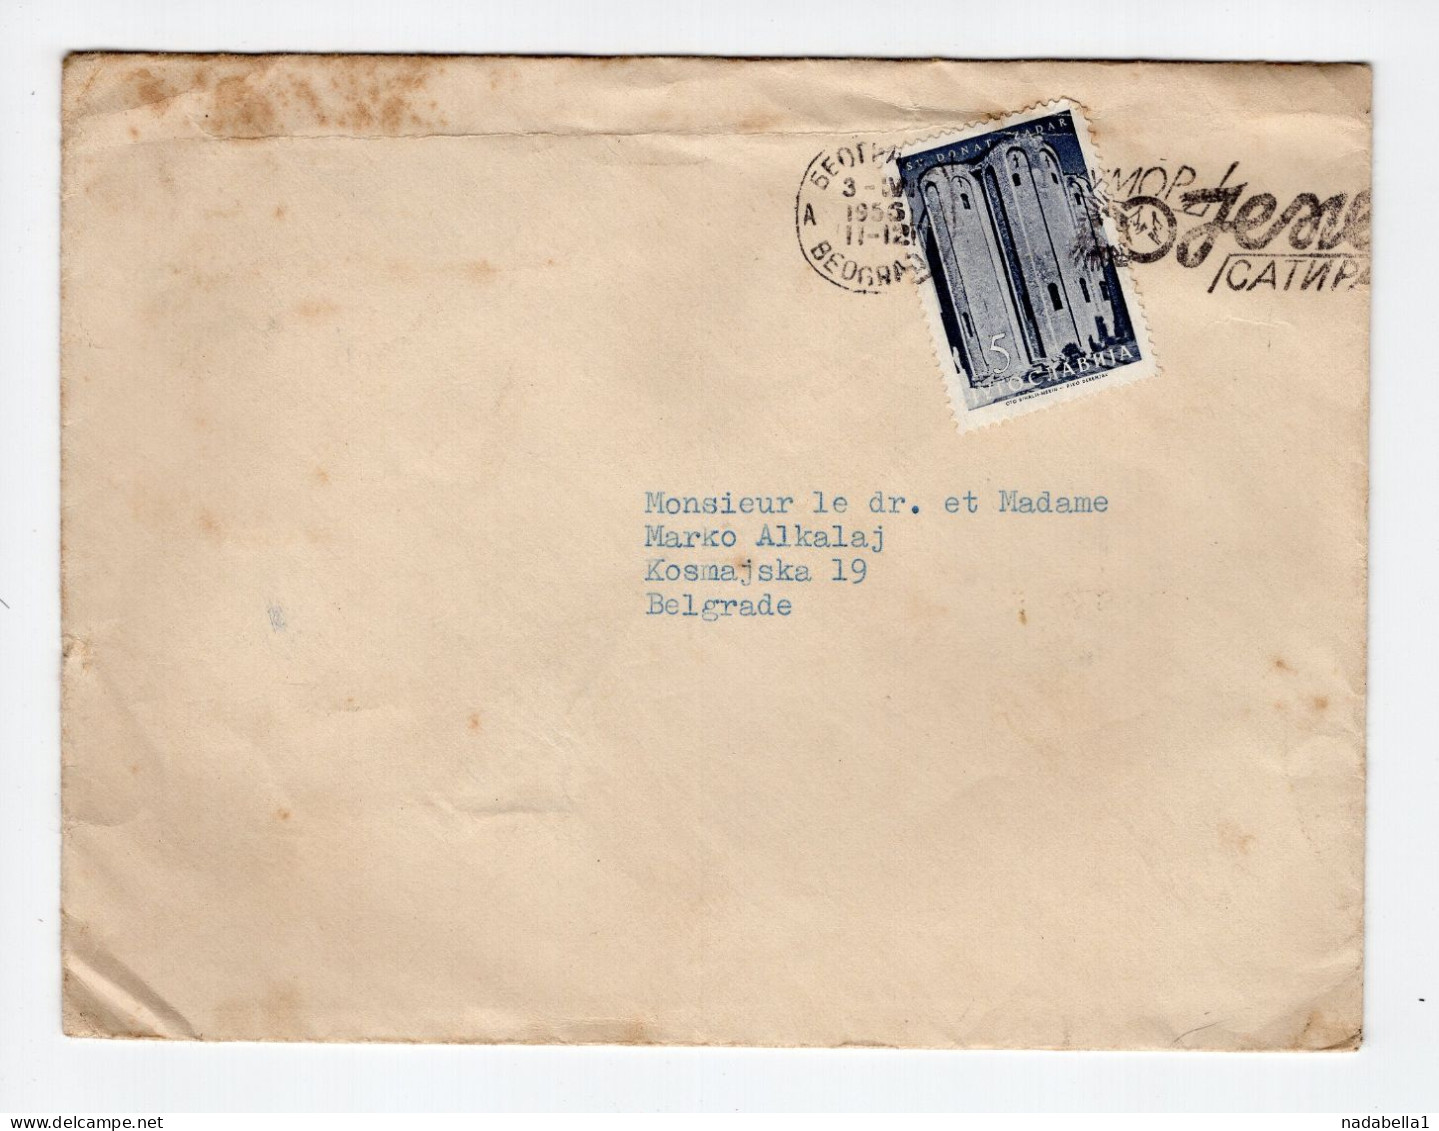 1956. YUGOSLAVIA,SERBIA,JUDAICA,BELGRADE,ISRAEL EMBASSY BELGRADE COVER SENT TO DR. MARKO ALKALI,WATER MARK - Briefe U. Dokumente